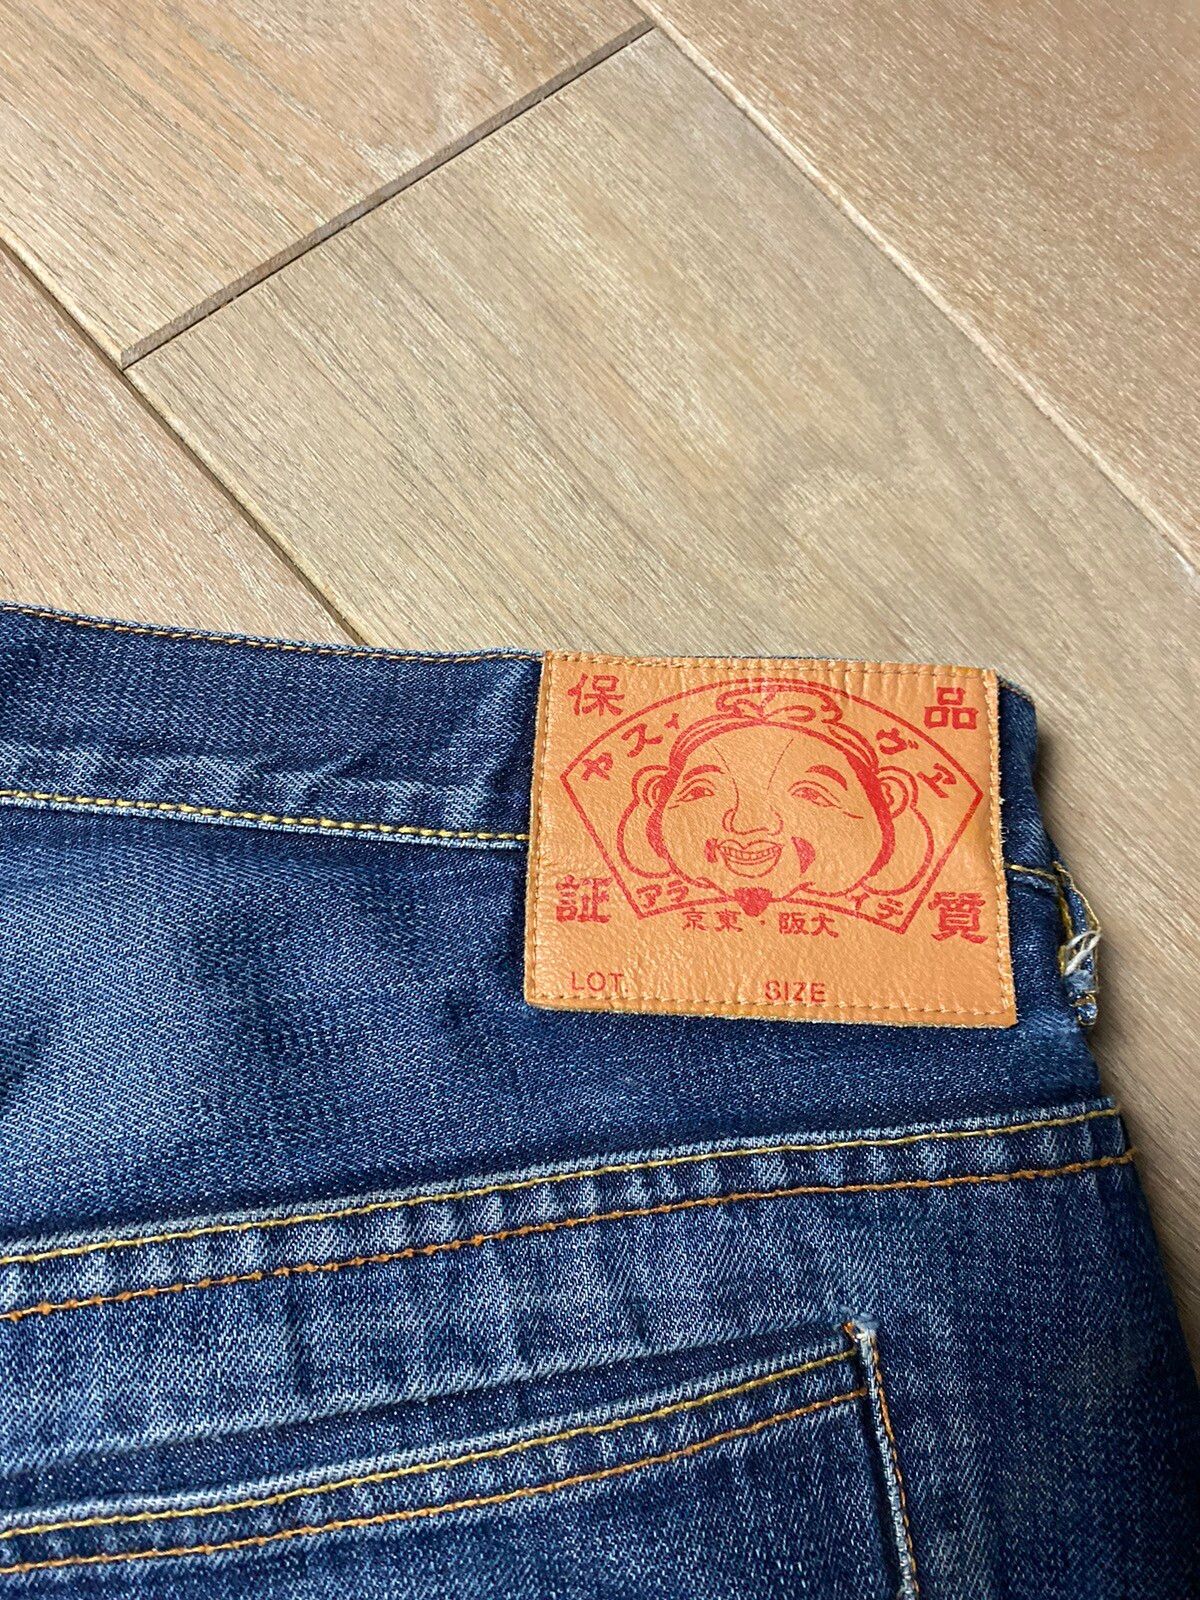 Vintage Evisu Japan vintage blue jeans denim pants big seagull logo Size US 38 / EU 54 - 5 Thumbnail